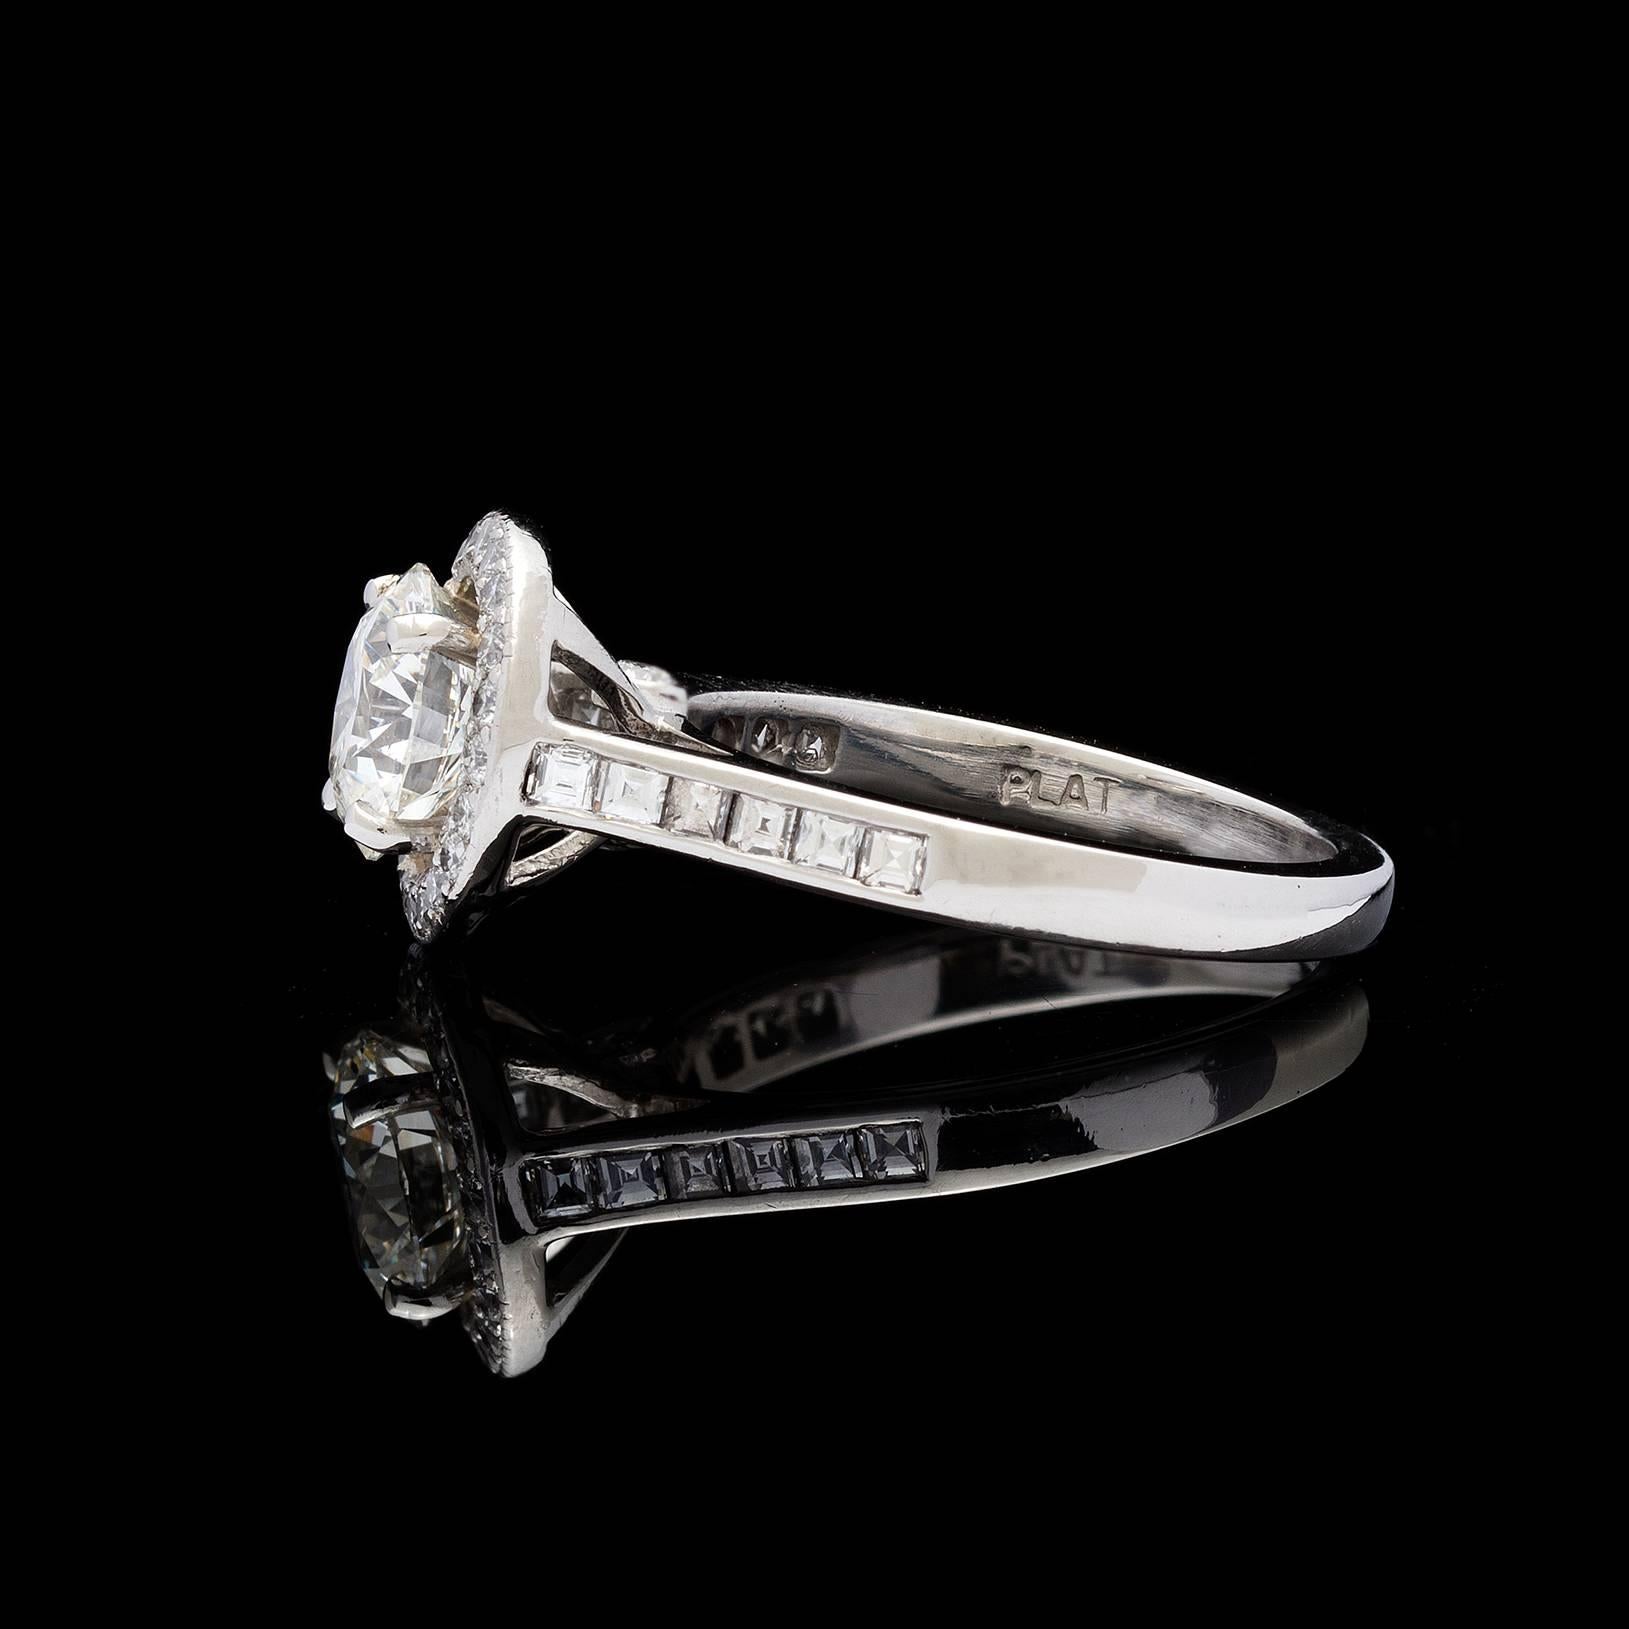 1.57 carat diamond ring